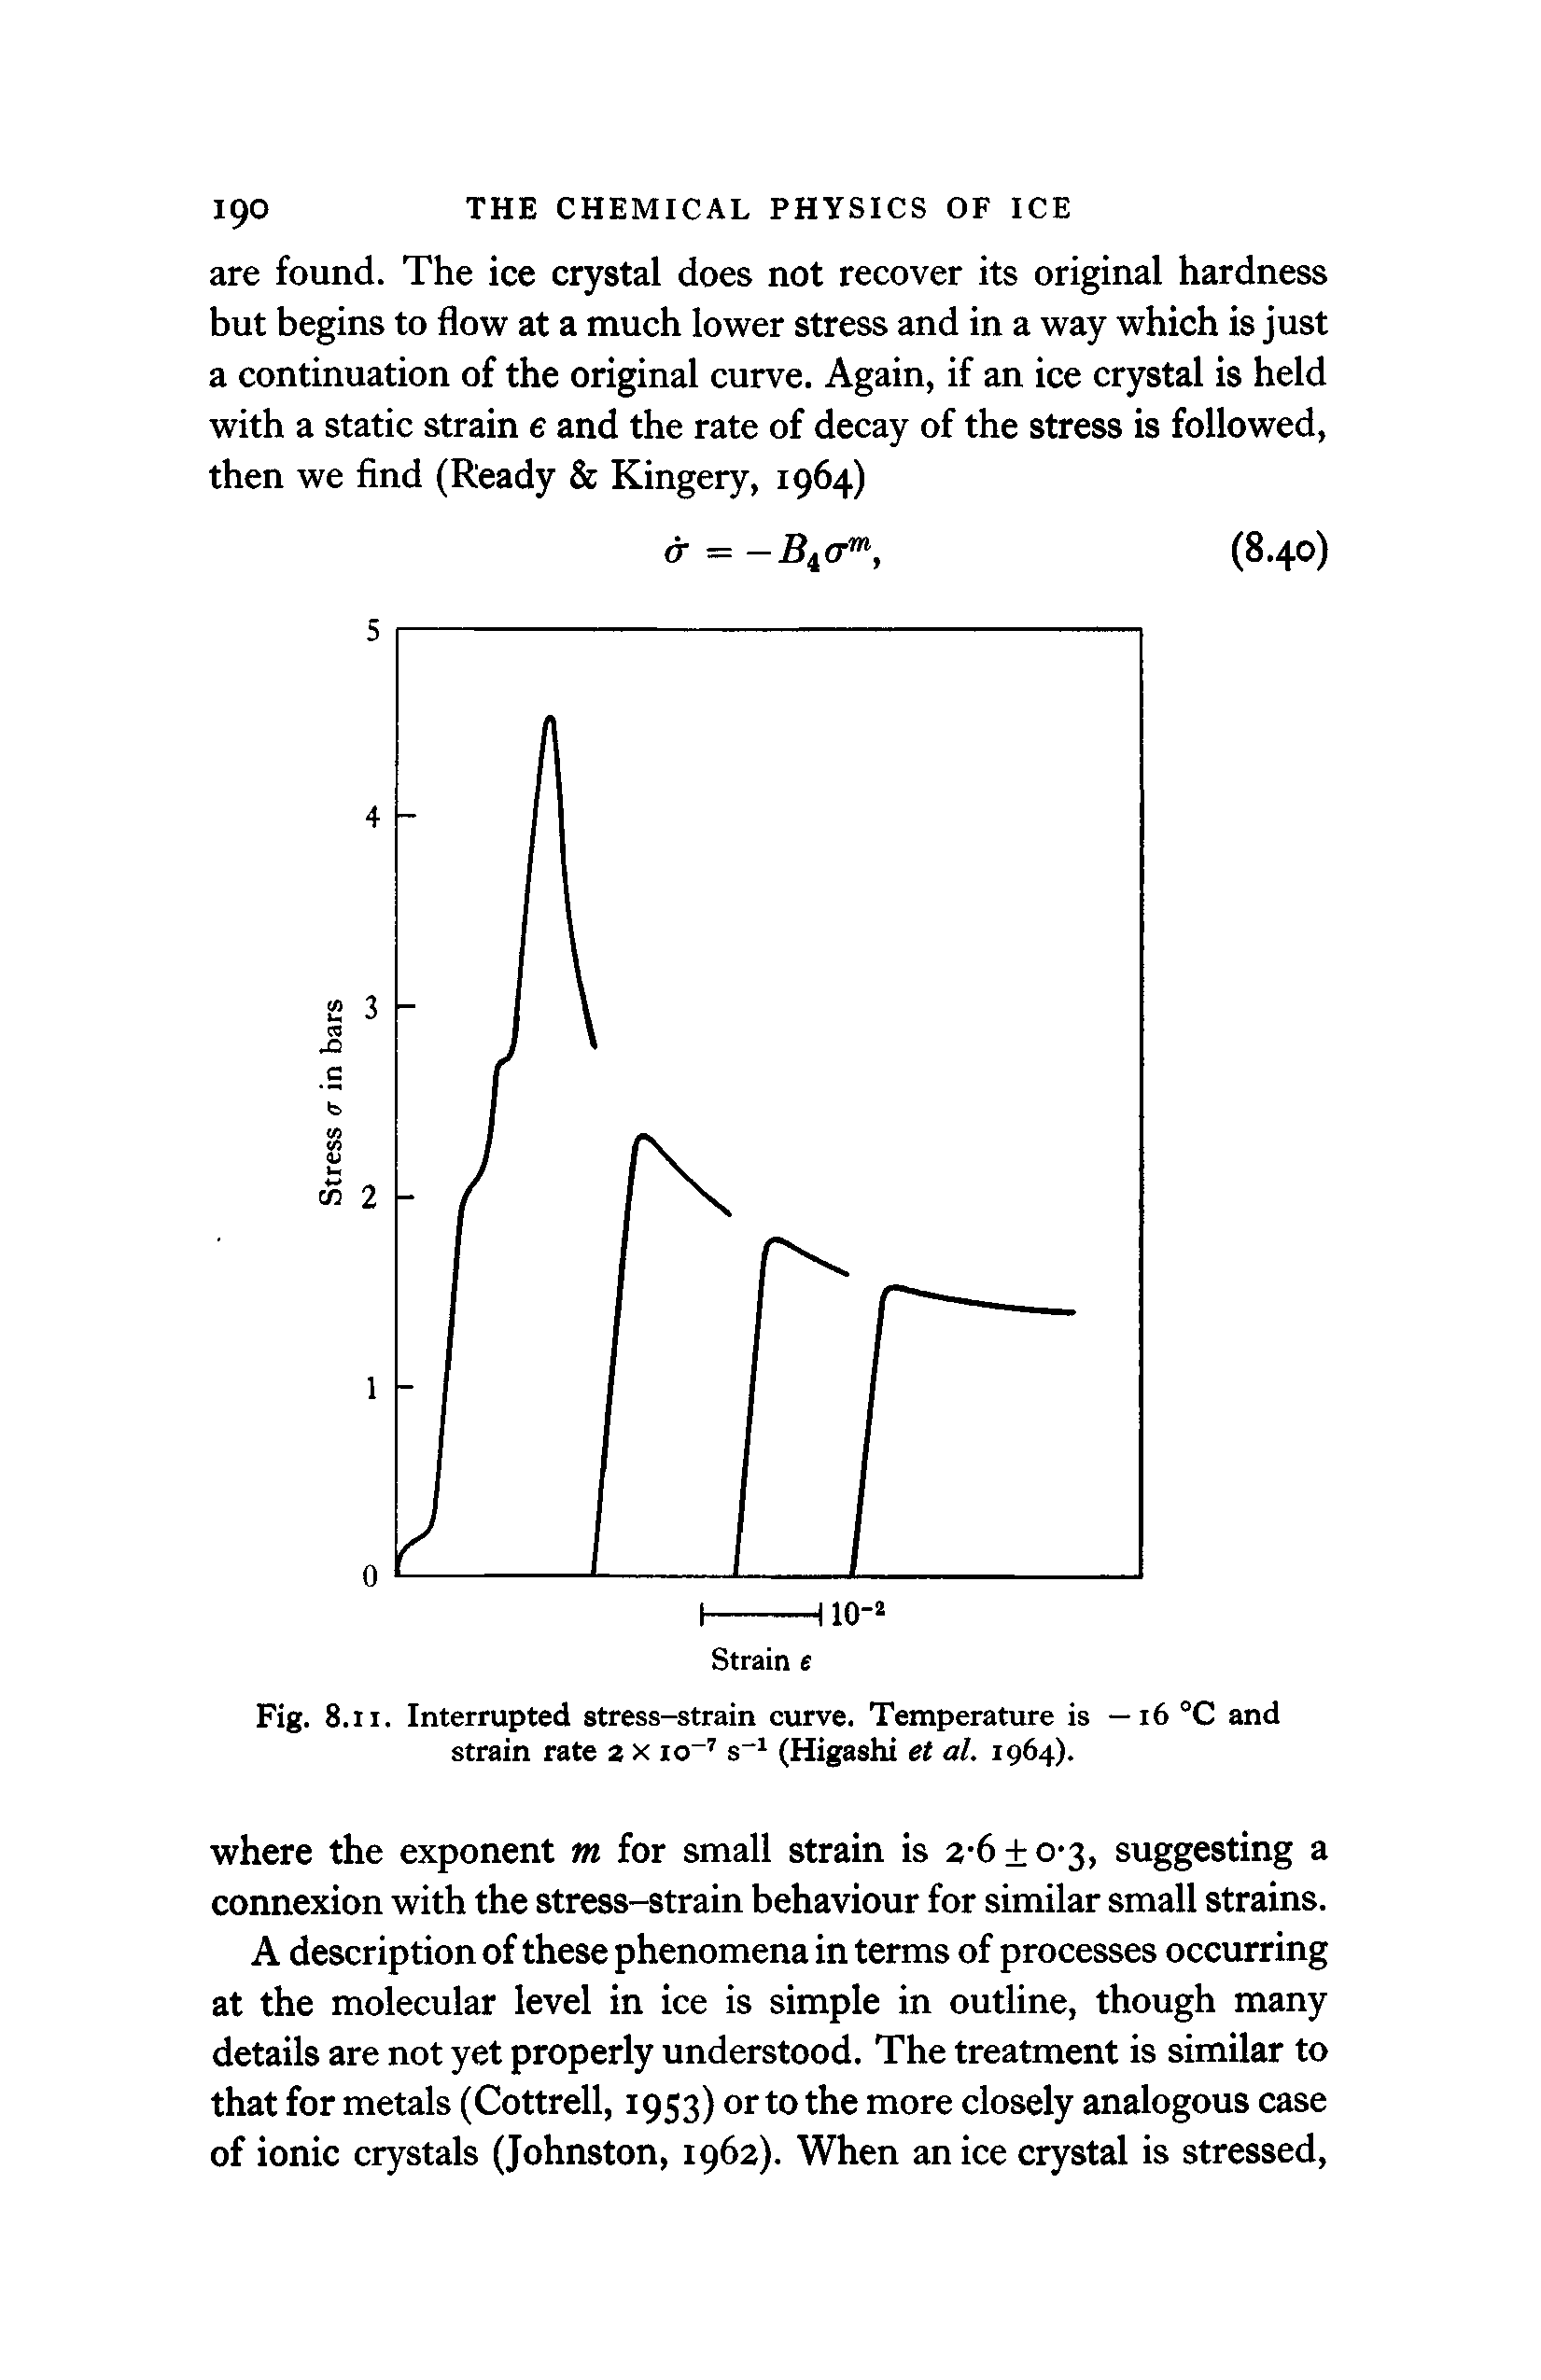 Fig. 8.11. Interrupted stress-strain curve. Temperature is —16 °C and strain rate z x io s" (Higashi et al. 1964).